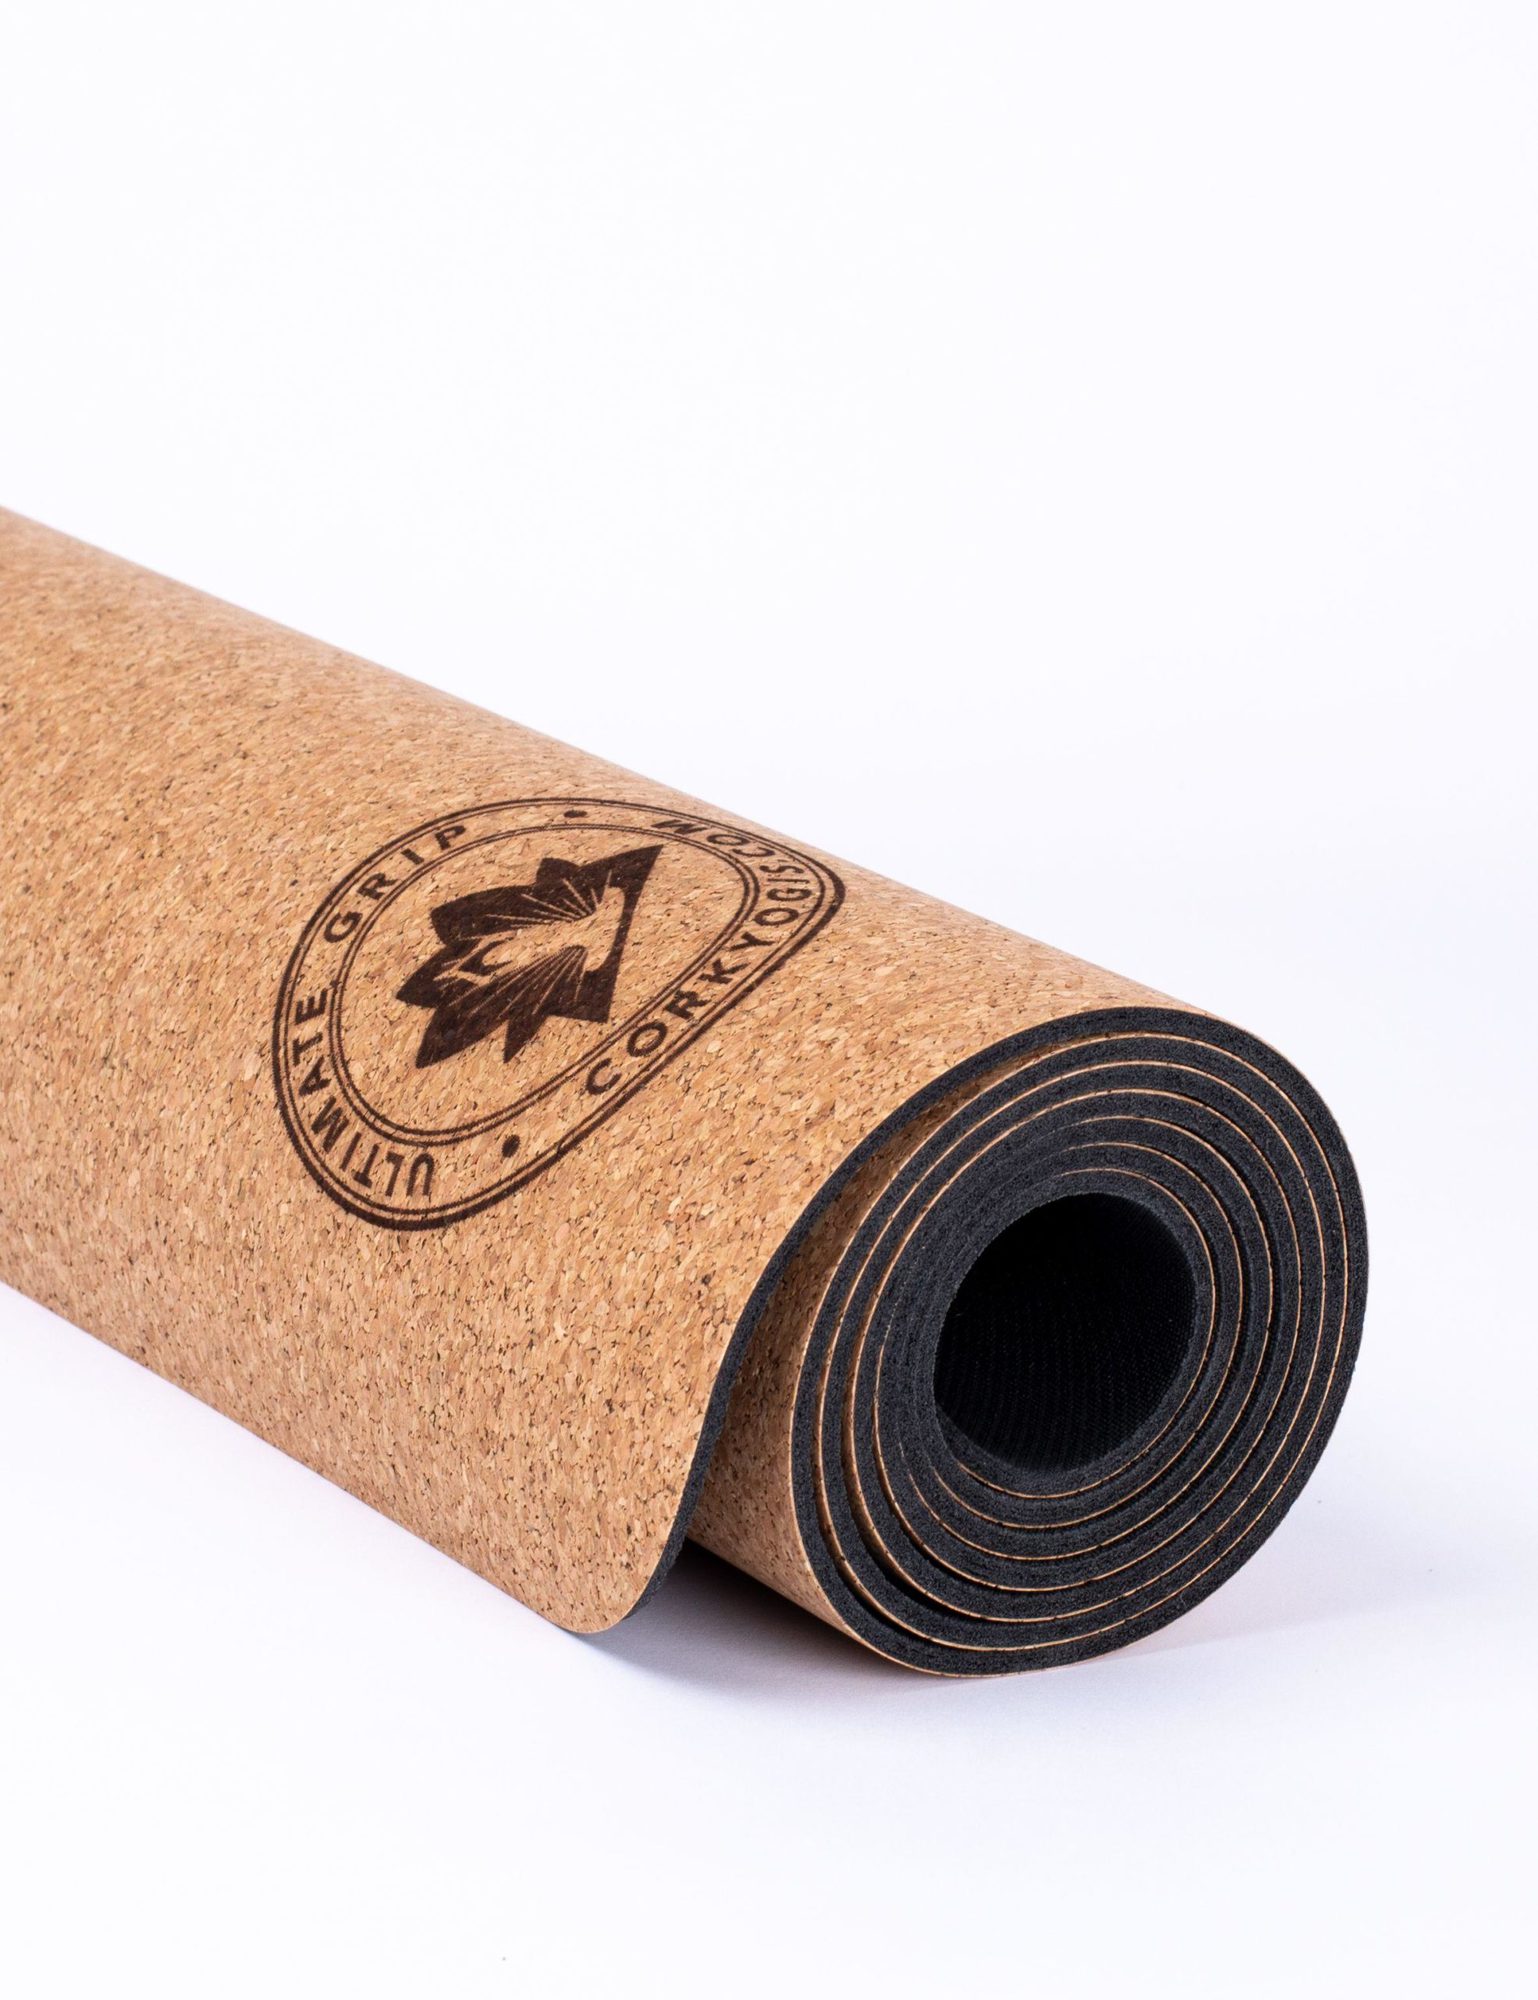 The Premium Yogi Cork Yoga Mat